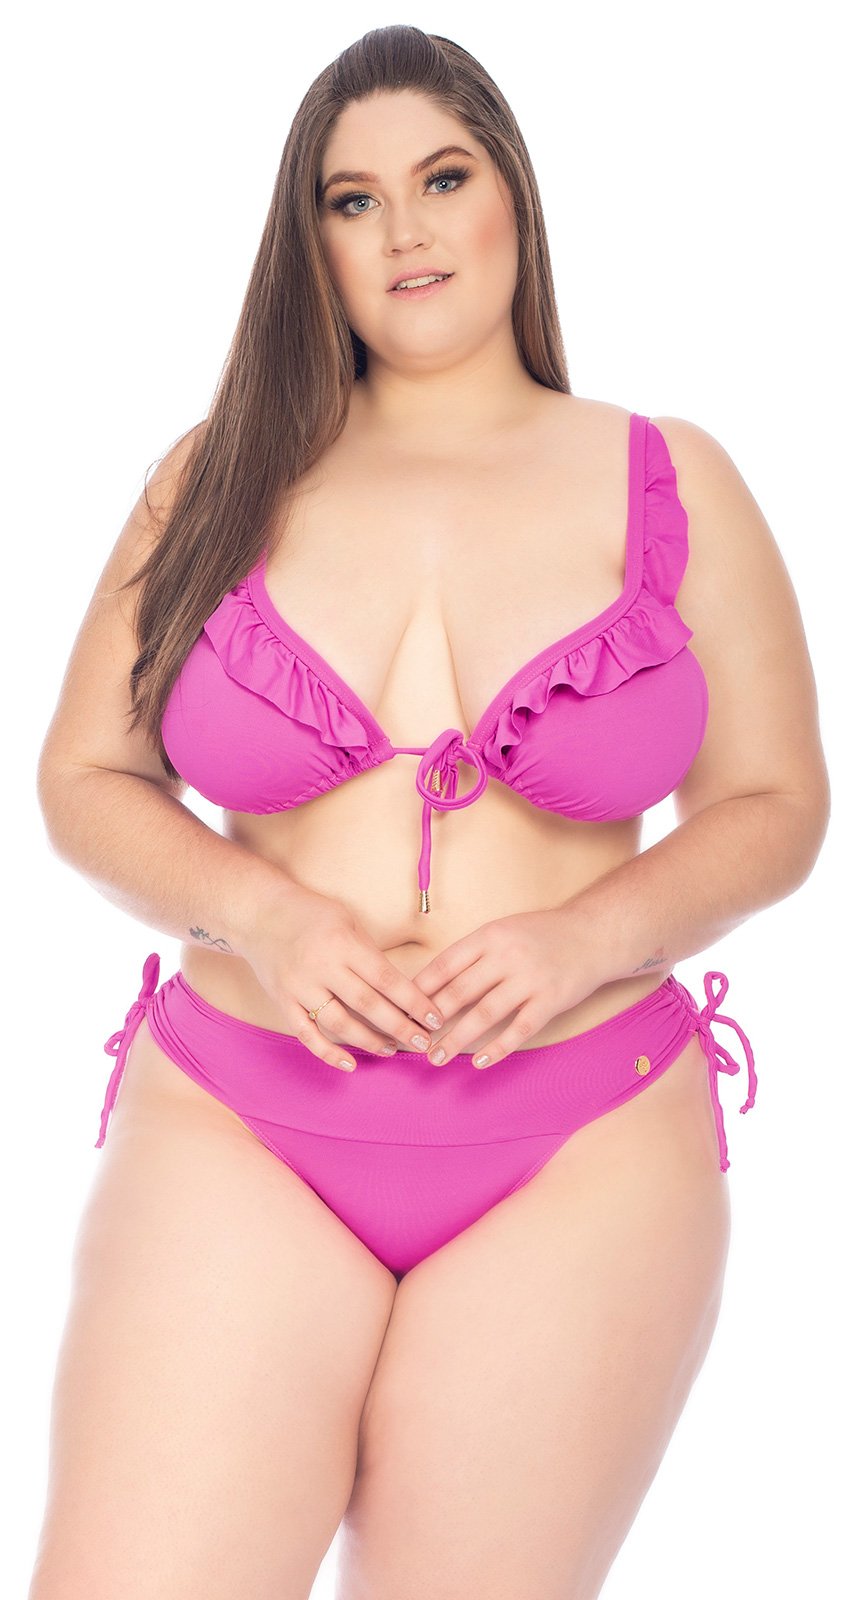 september wervelkolom opgraven Plus Size Purple Brazilian Bikini With Ruffle Details - Biquini Babado Bel  Rosa - Acquarosa